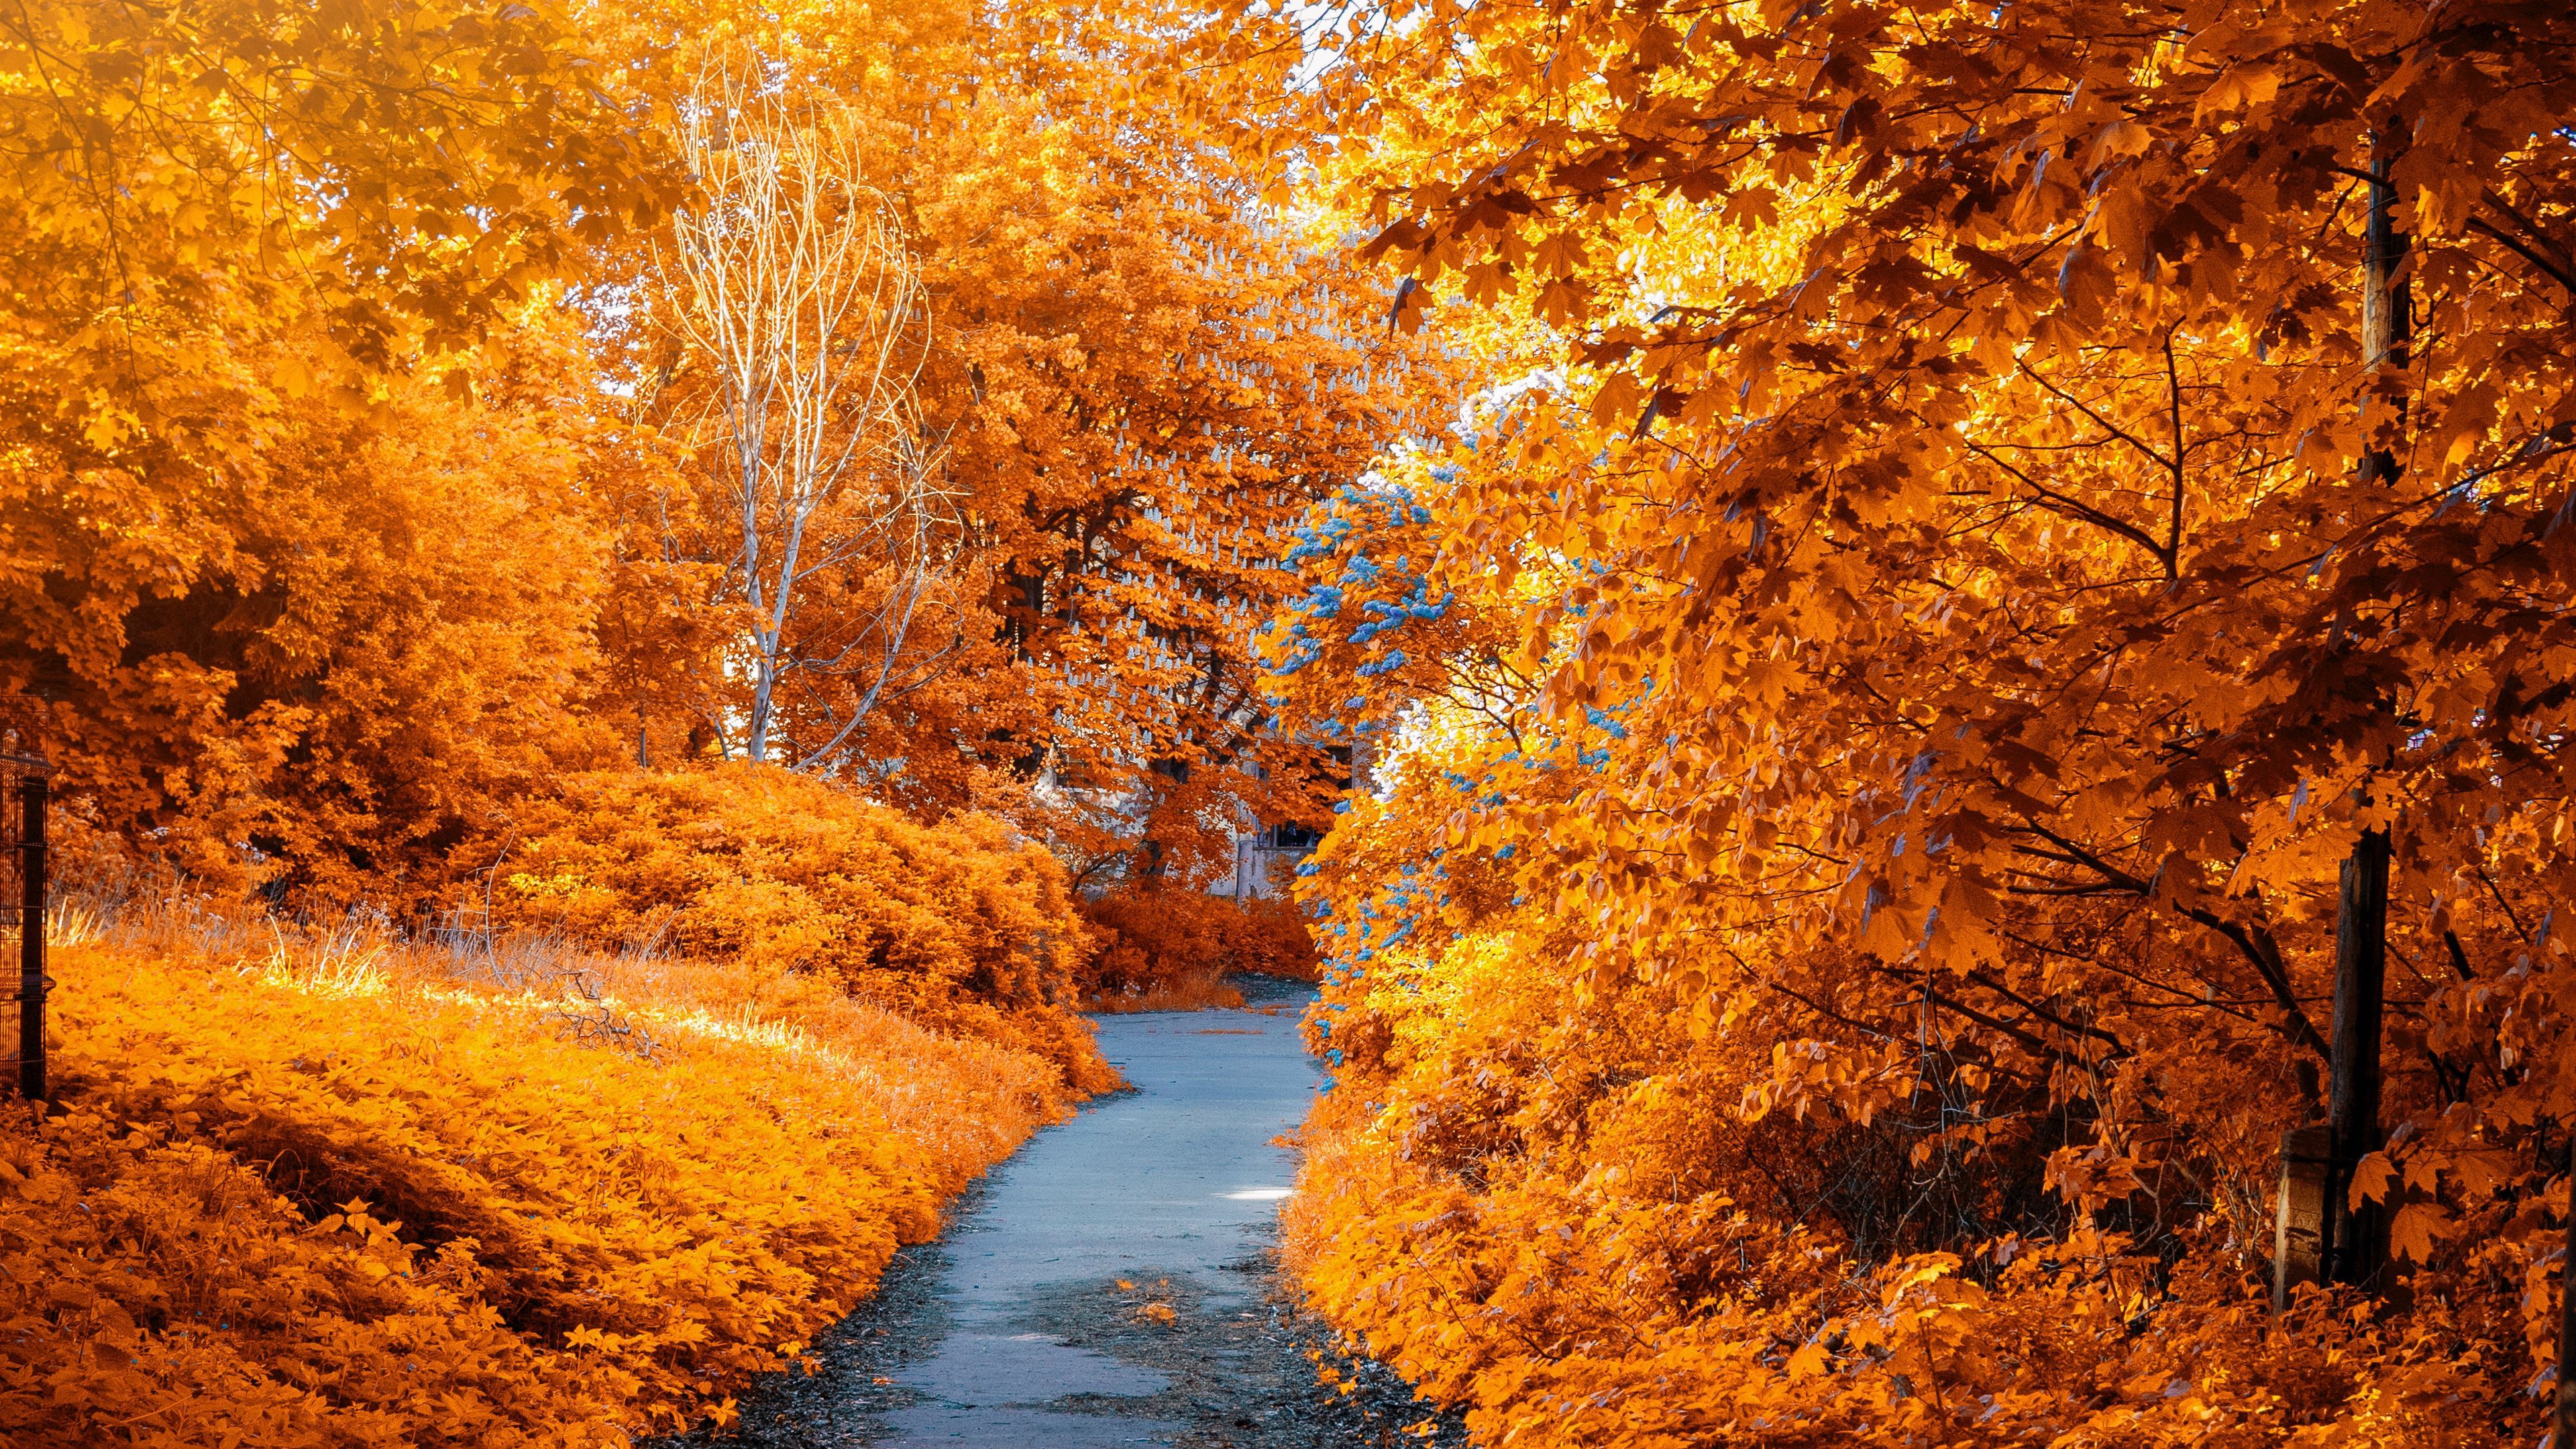 Download wallpaper 3840x2160 autumn, path, park, foliage 4k uhd 16:9 HD background